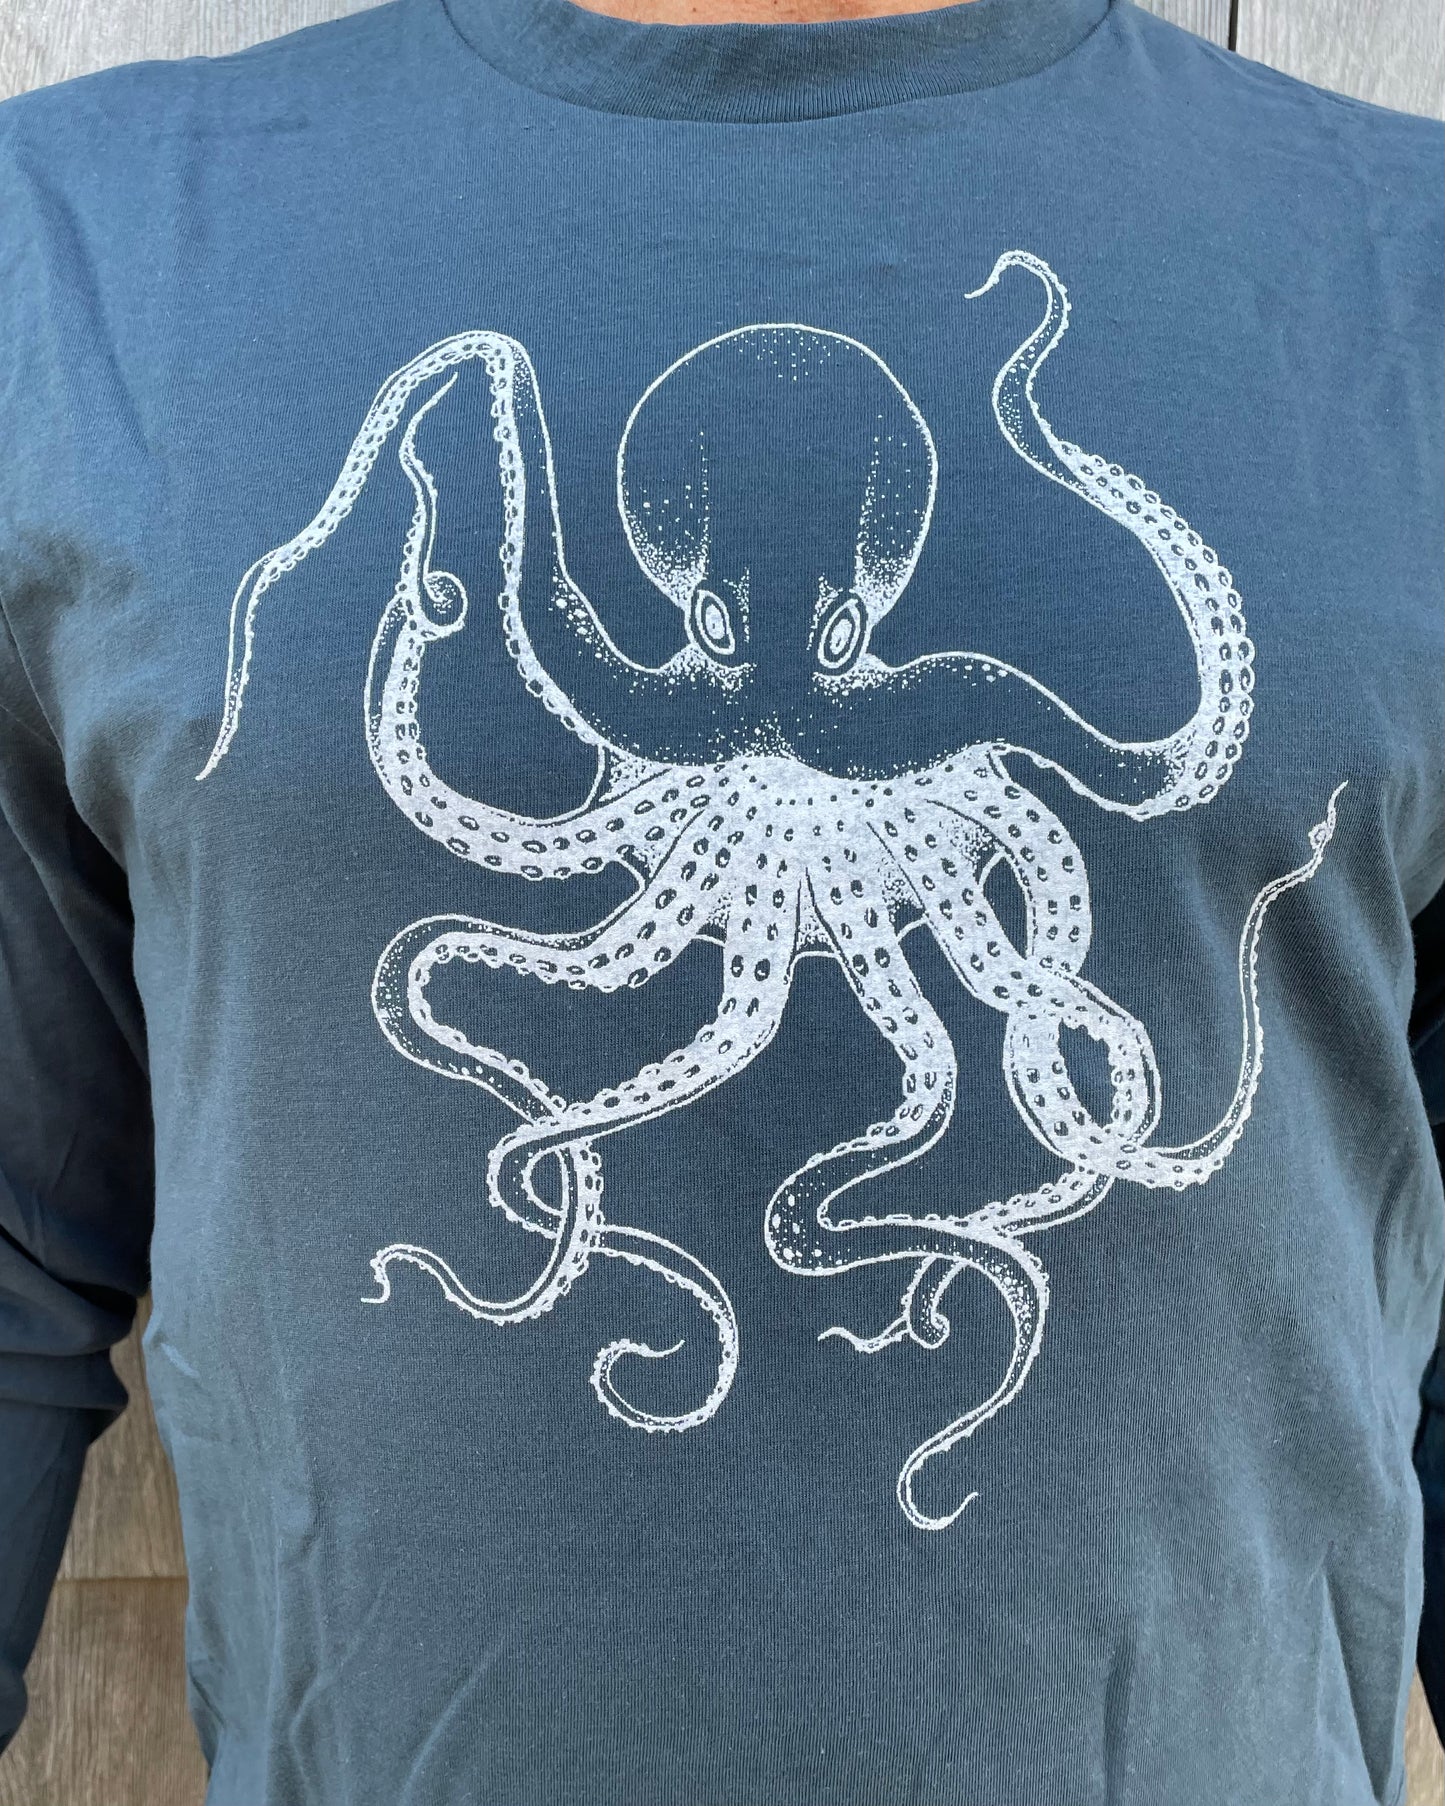 Octopus Long Sleeve